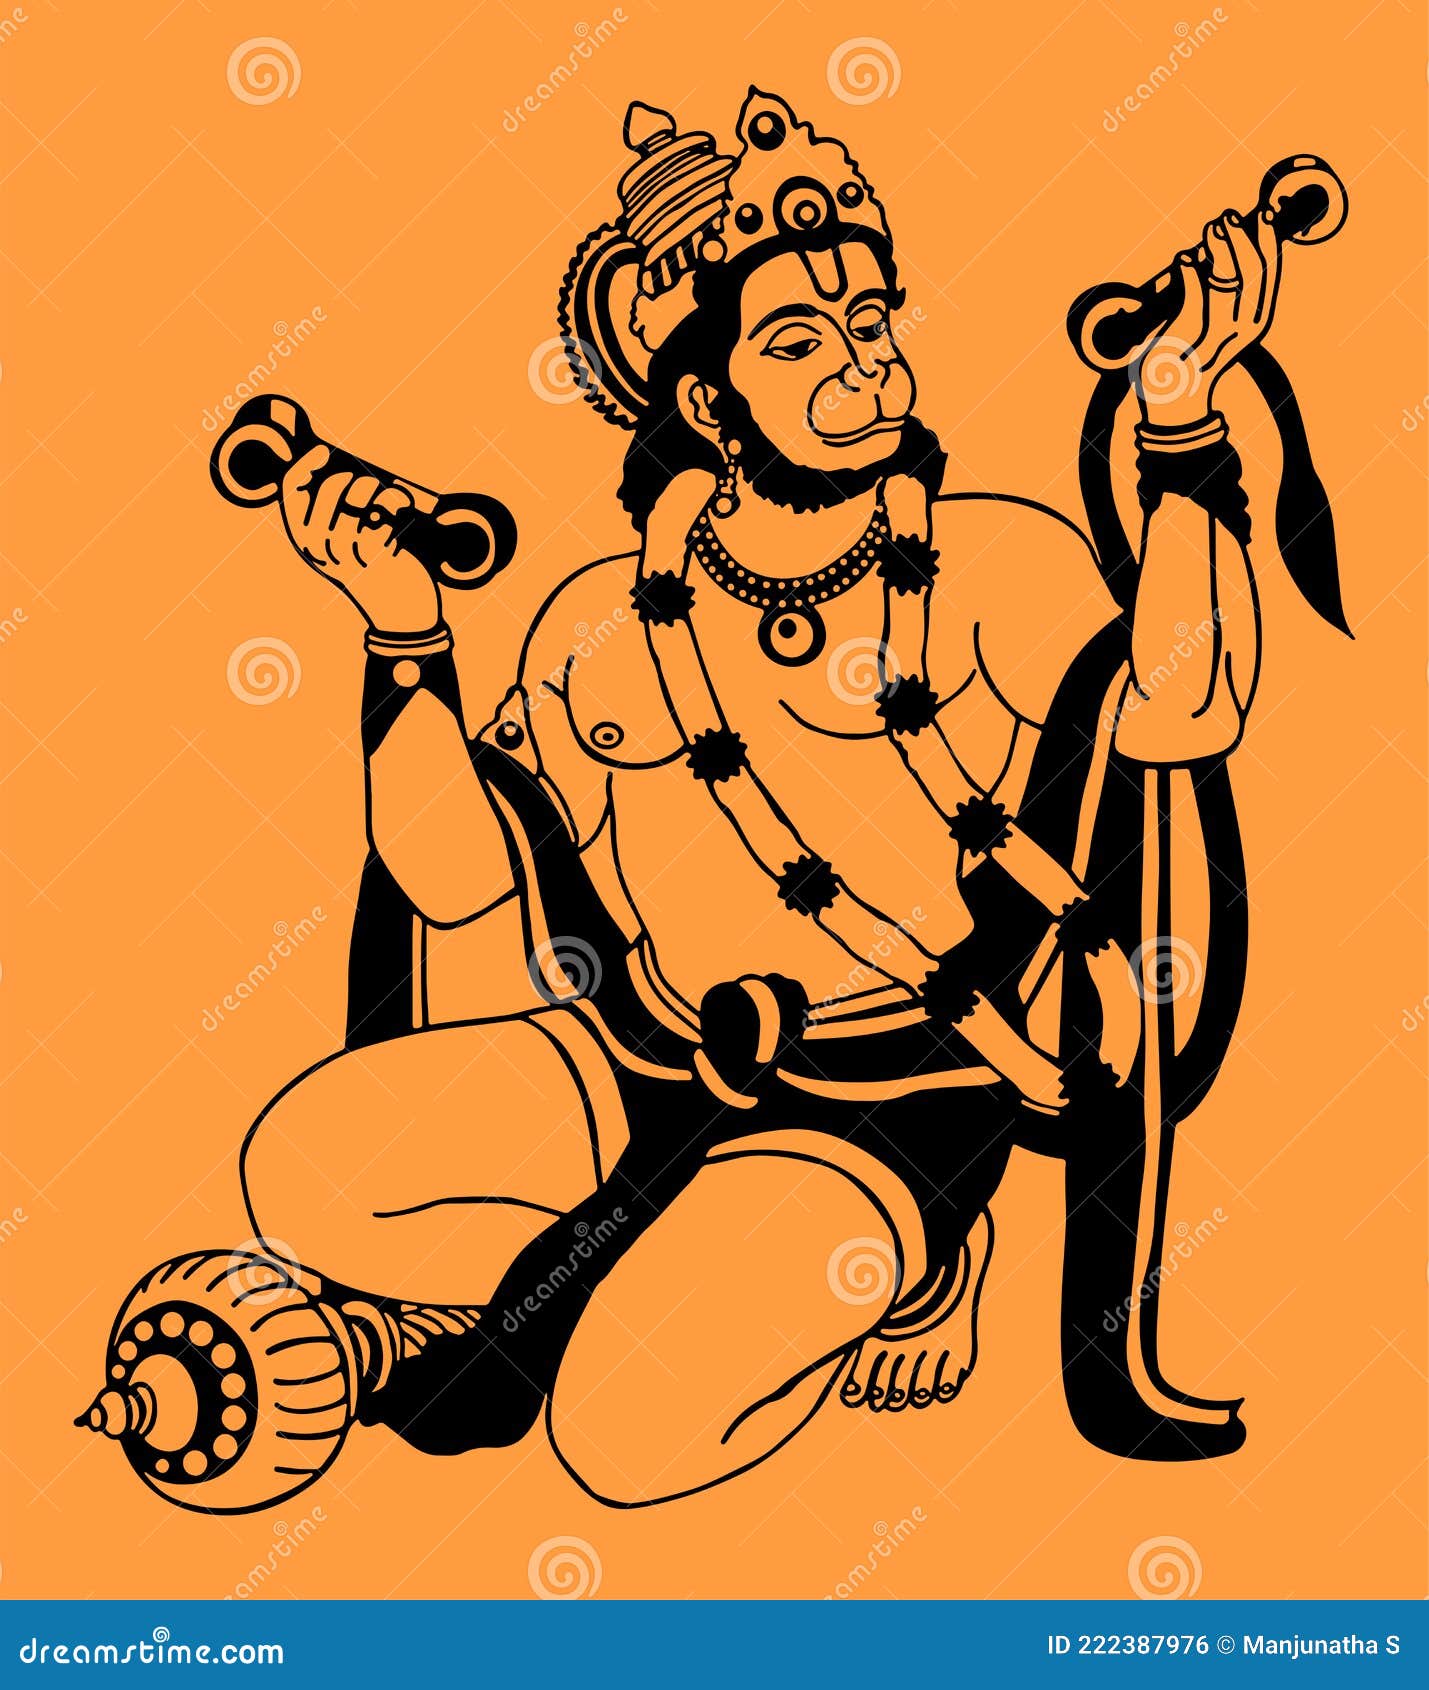 Prajapati Hiren on LinkedIn: #lord #hanuman #art #sketch #drawing